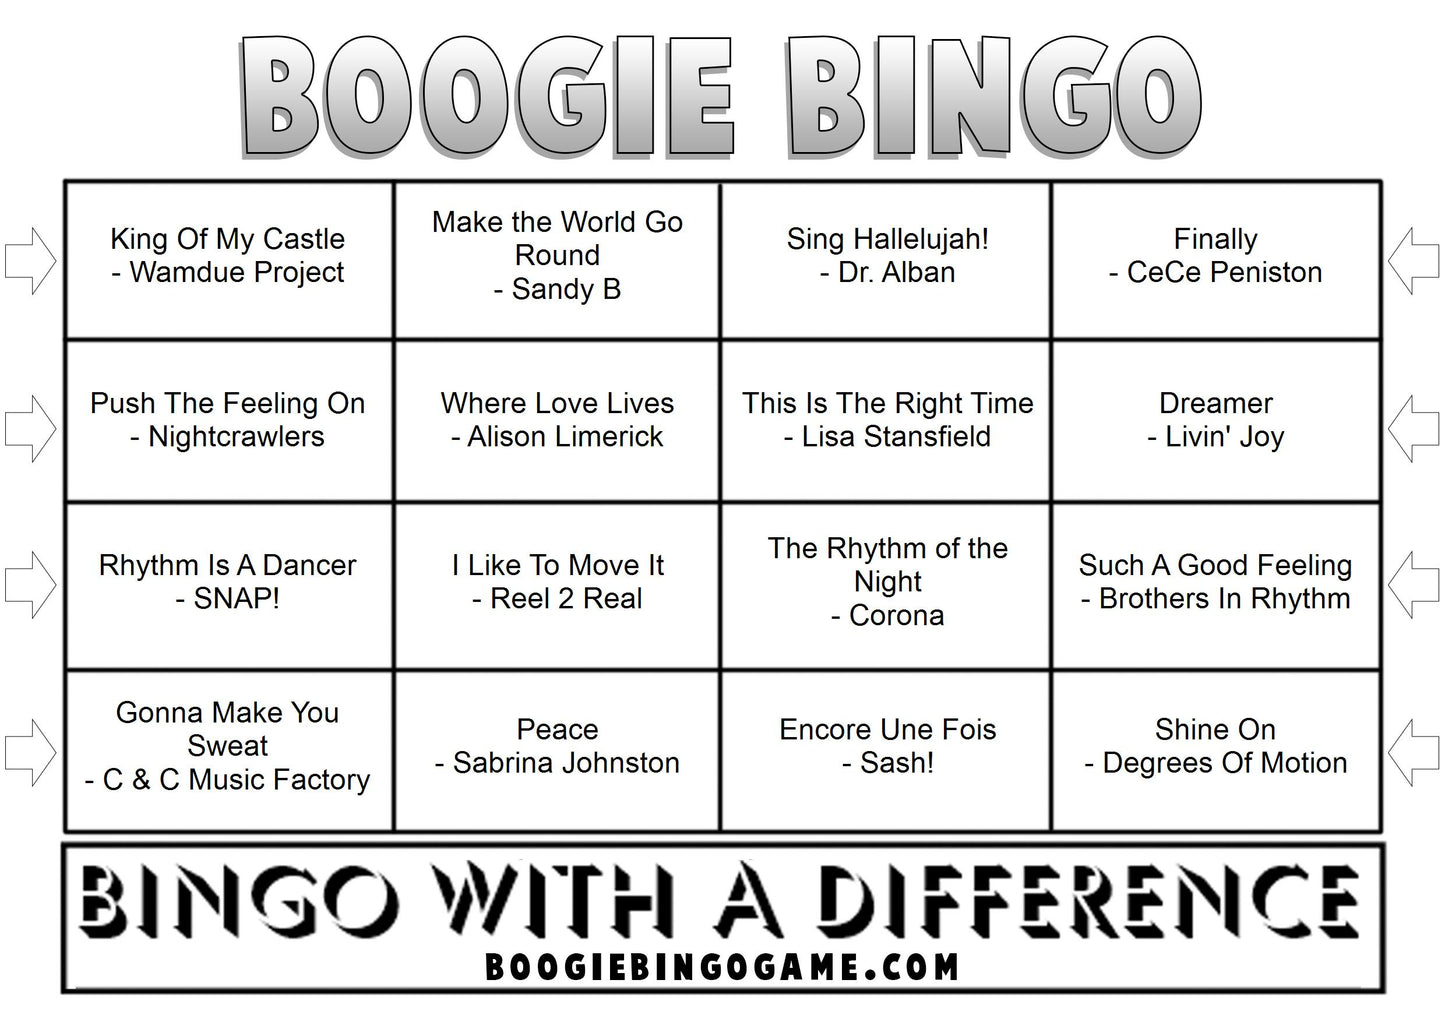 Game 69 | Dancefloor Classics | Boogie Bingo | Printable Music Bingo Tickets